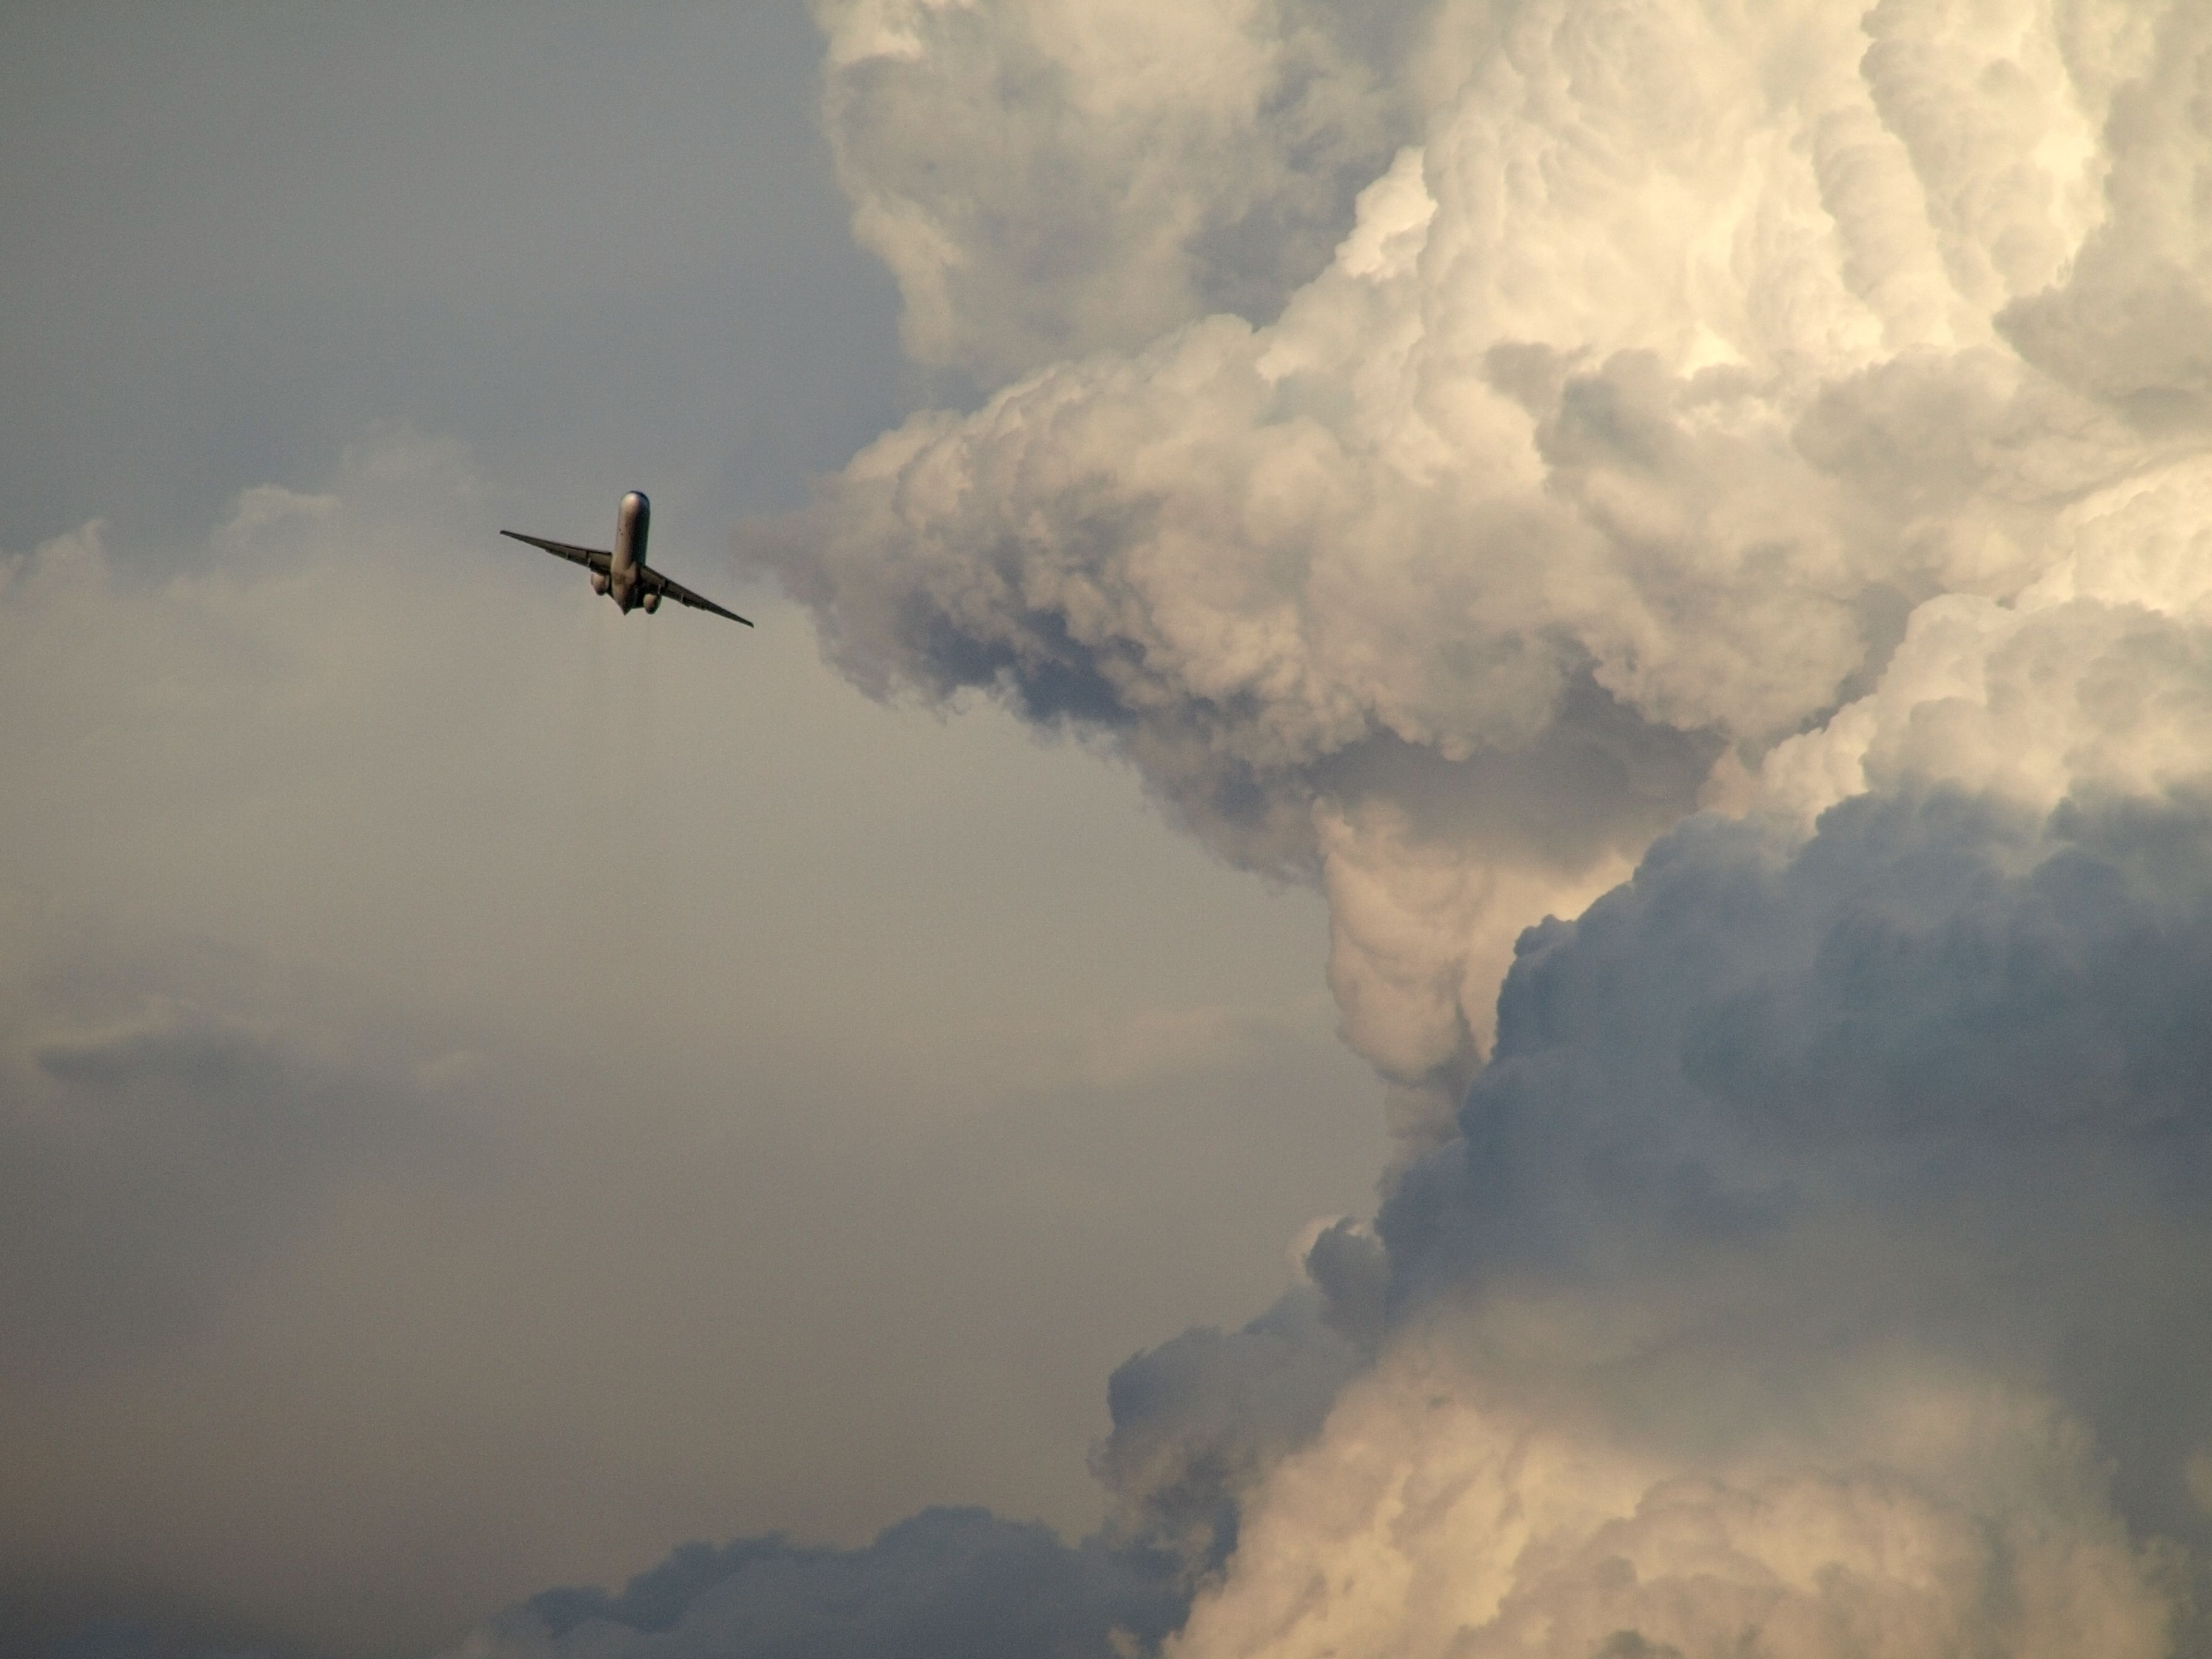 An aircraft banking around storm clouds.